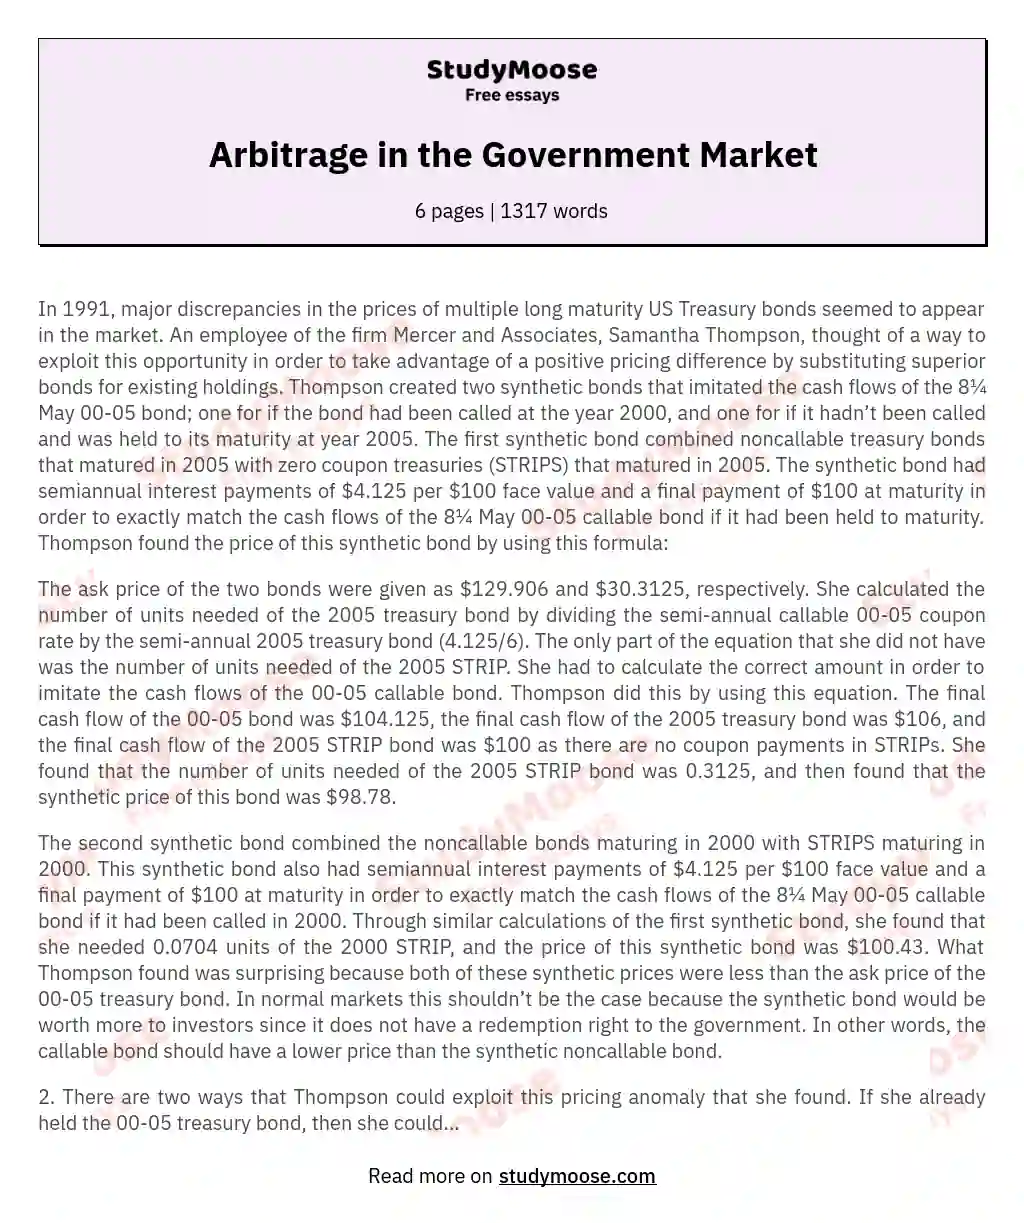 Arbitrage in the Government Market essay